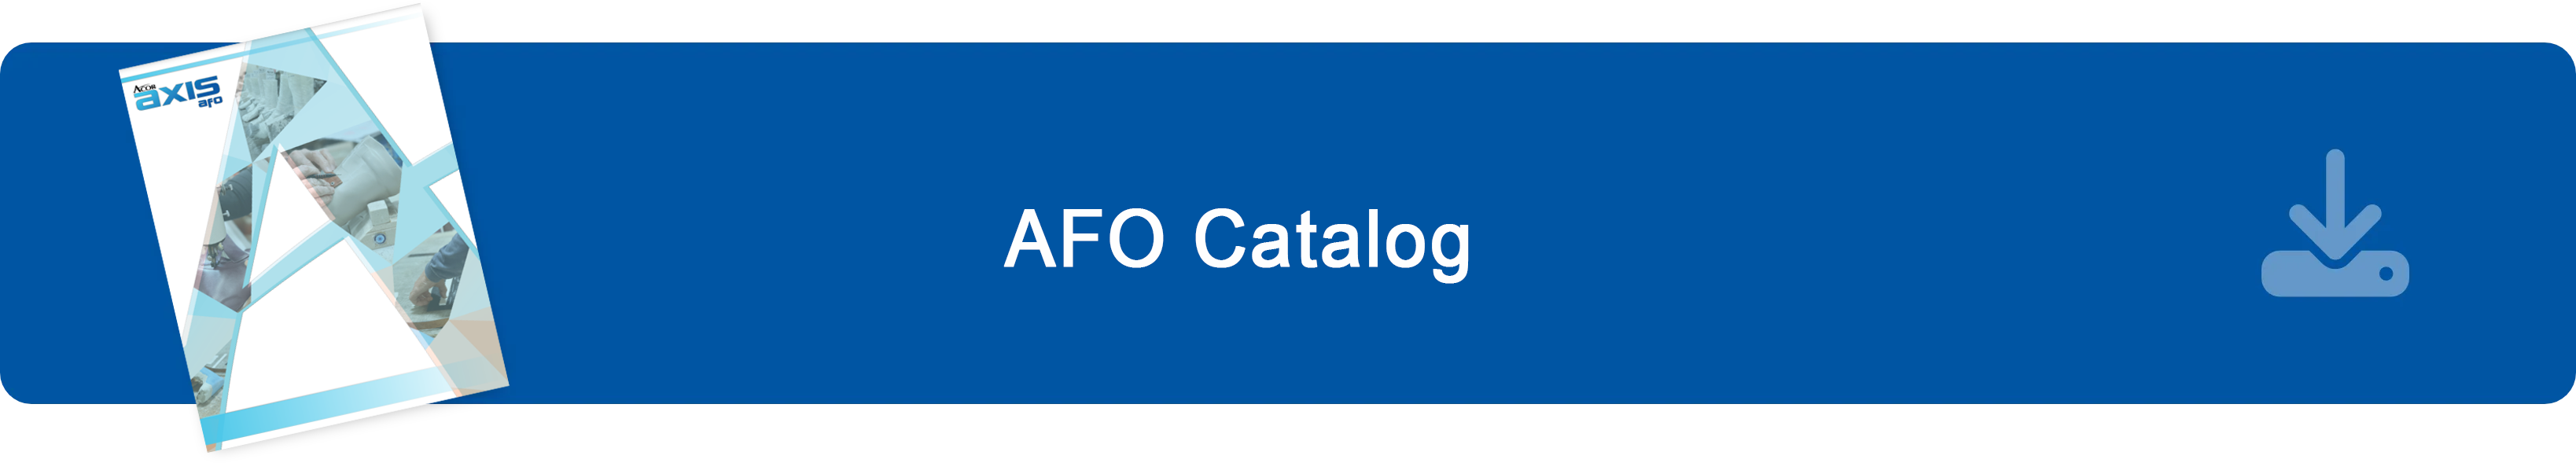 AFO Catalog Download